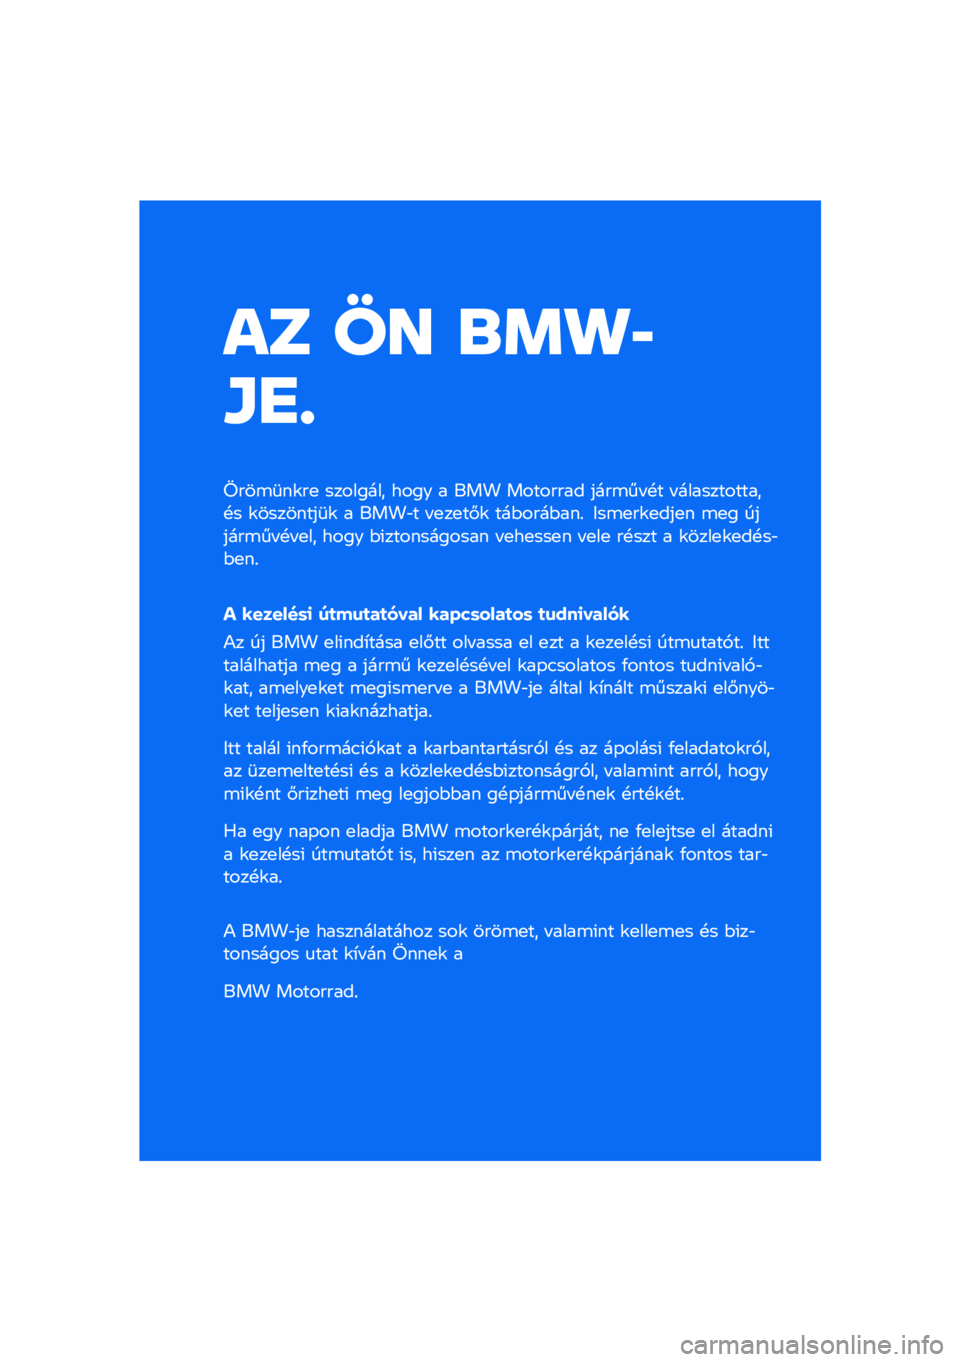 BMW MOTORRAD R 1250 RS 2020  Kezelési útmutató (in Hungarian) �� �� �\b�	�
�
�\f�
�
����\b�	��\f��
 �������� ���� � ��� �������� ����\b�� �!� � ������������!� �\f��������	�\f � ����"� � �
��
��#�\